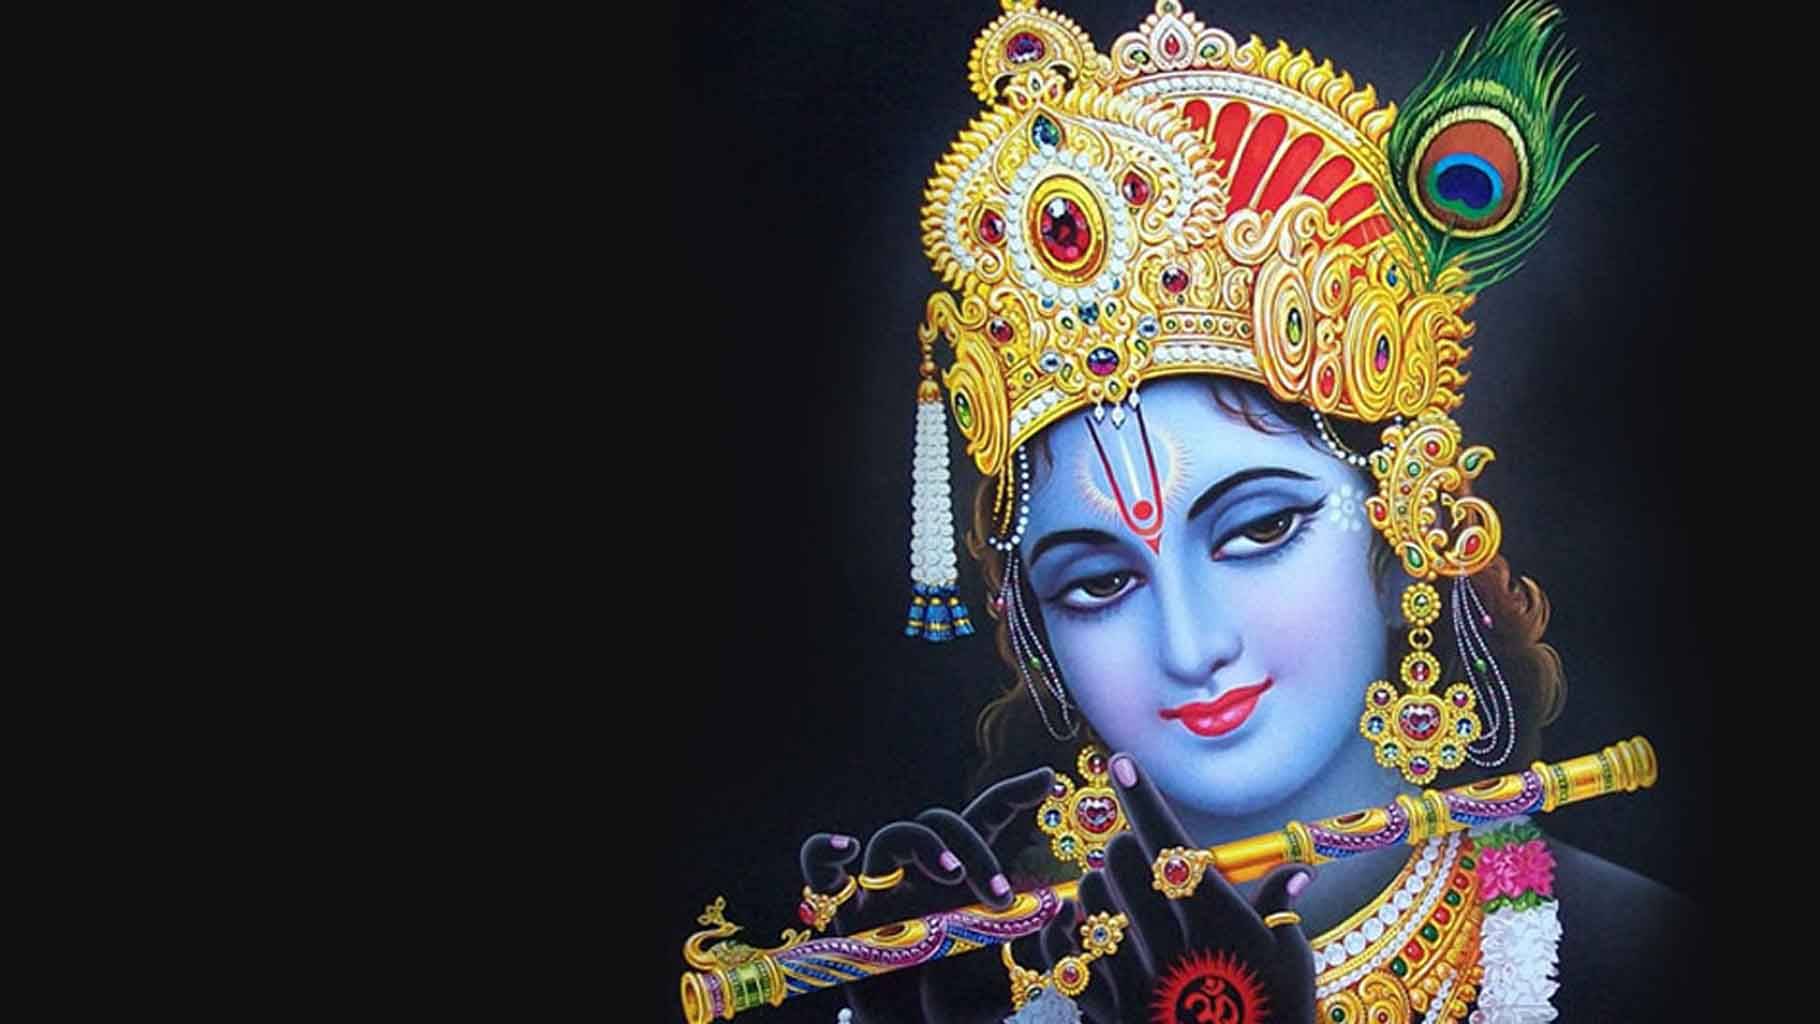 We need to embrace Shri Krishna now more than ever - ASEEMA